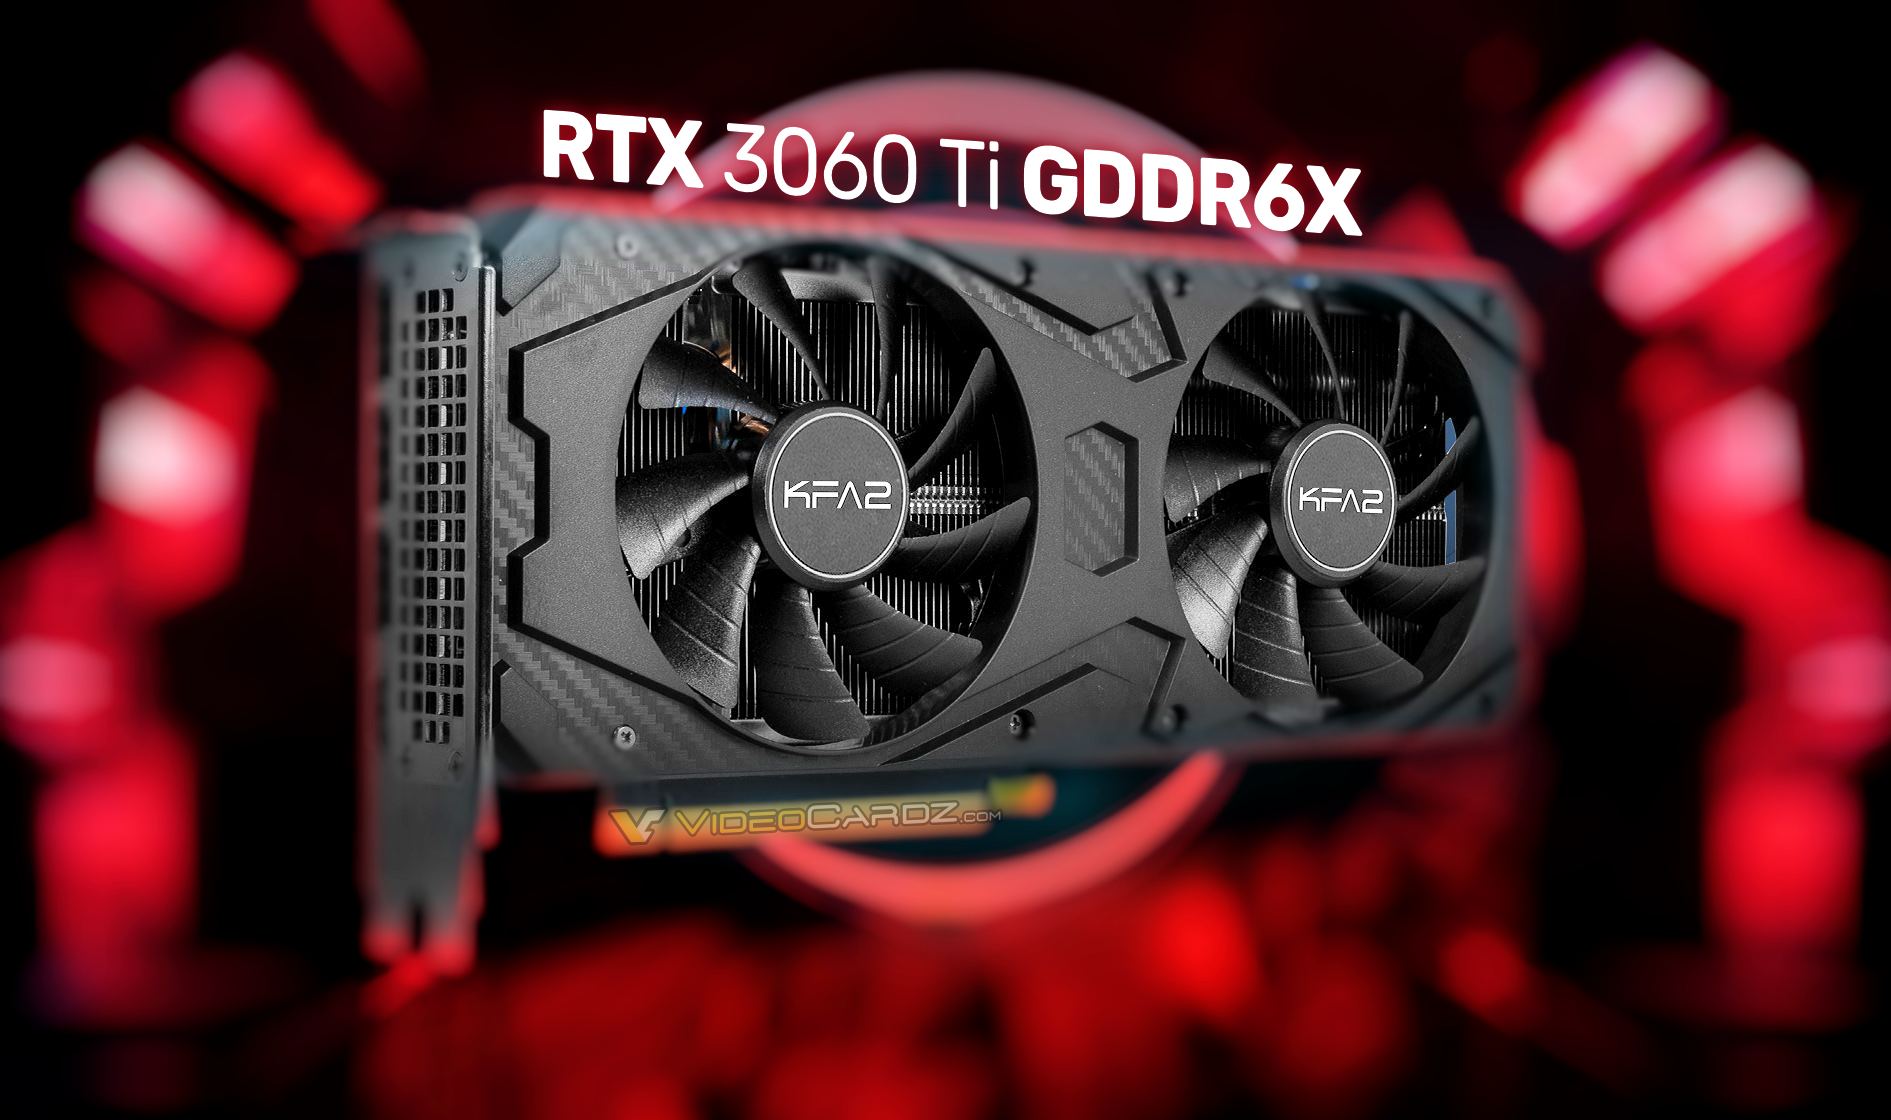 Where to buy the Nvidia RTX 3060 Ti